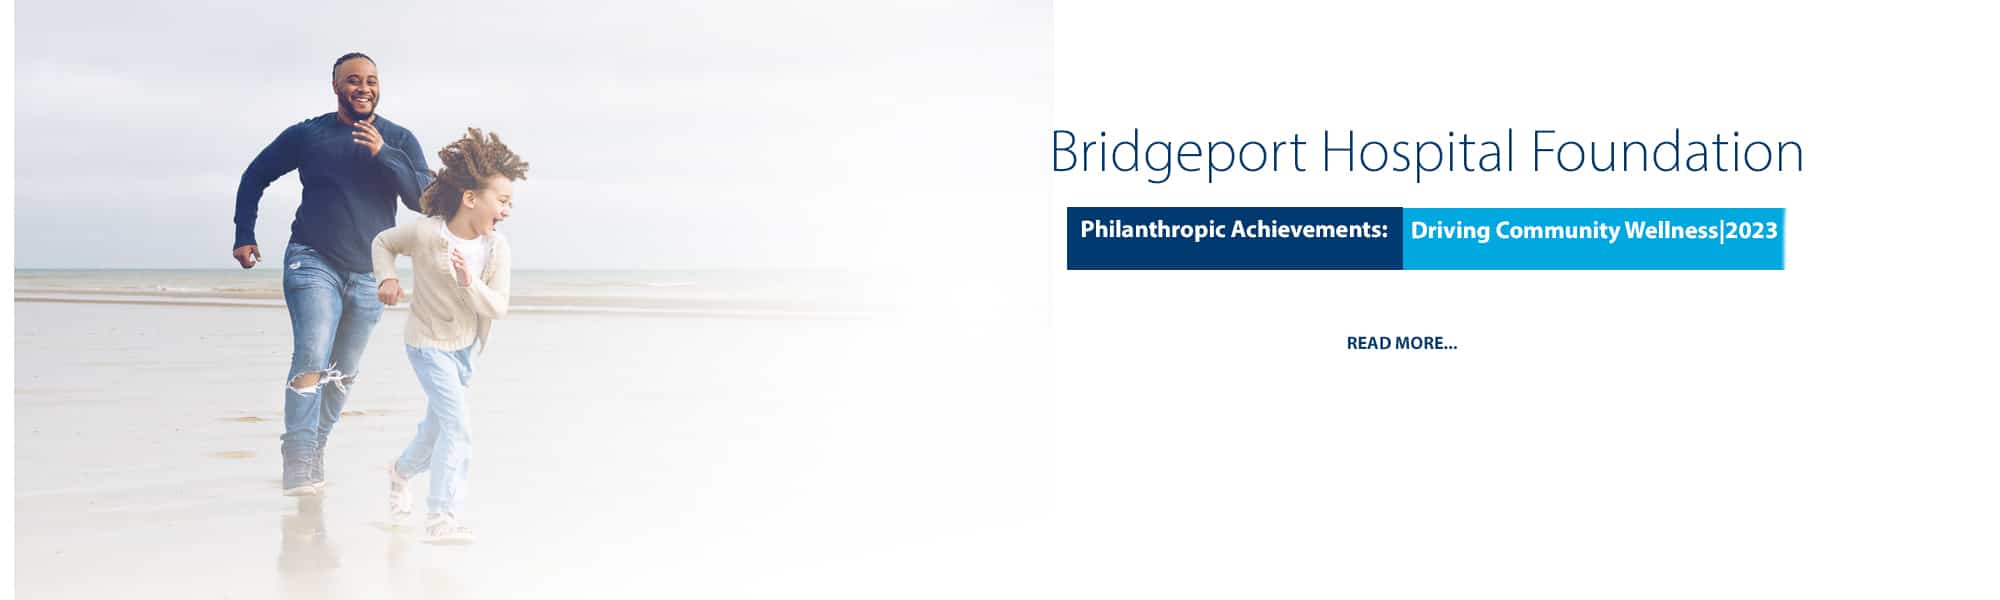 Bridgeport Hospital Foundation Philanthropic Achievements